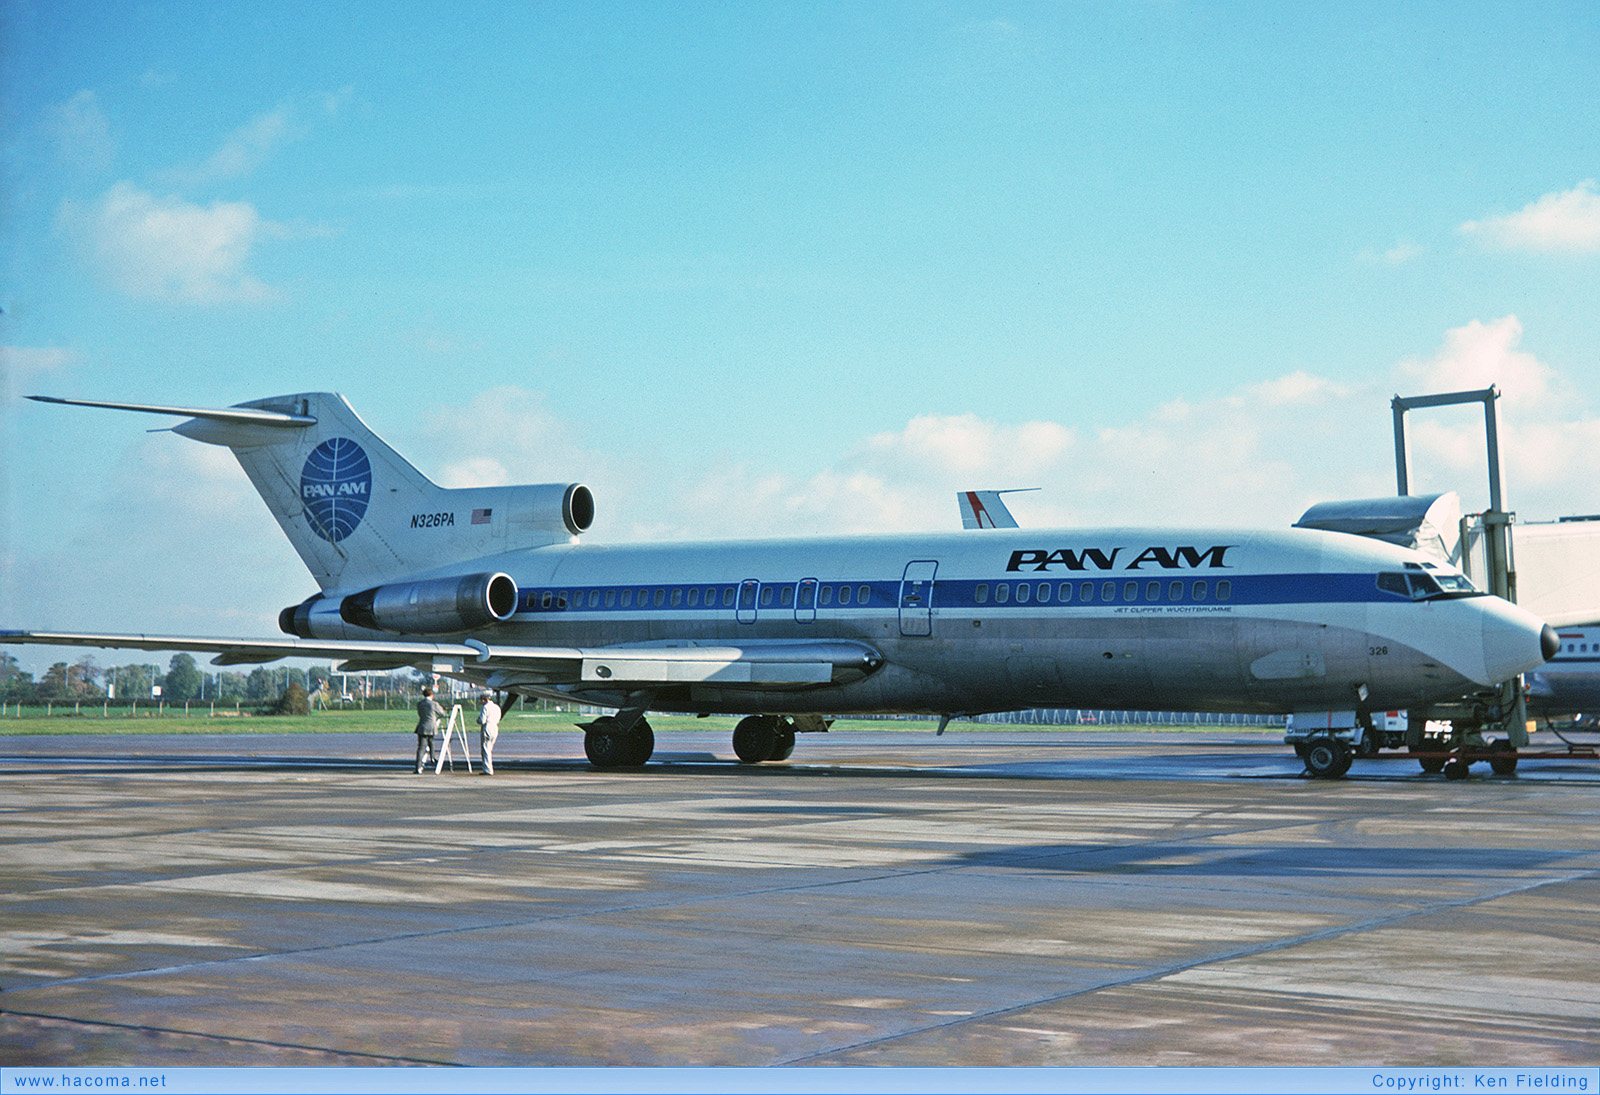 Photo of N326PA - Pan Am Clipper Muenchen / DeSoto / Nuremberg / White Falcon / Raven / Berolina / Wuchtbrumme - Manchester Airport - Oct 24, 1975